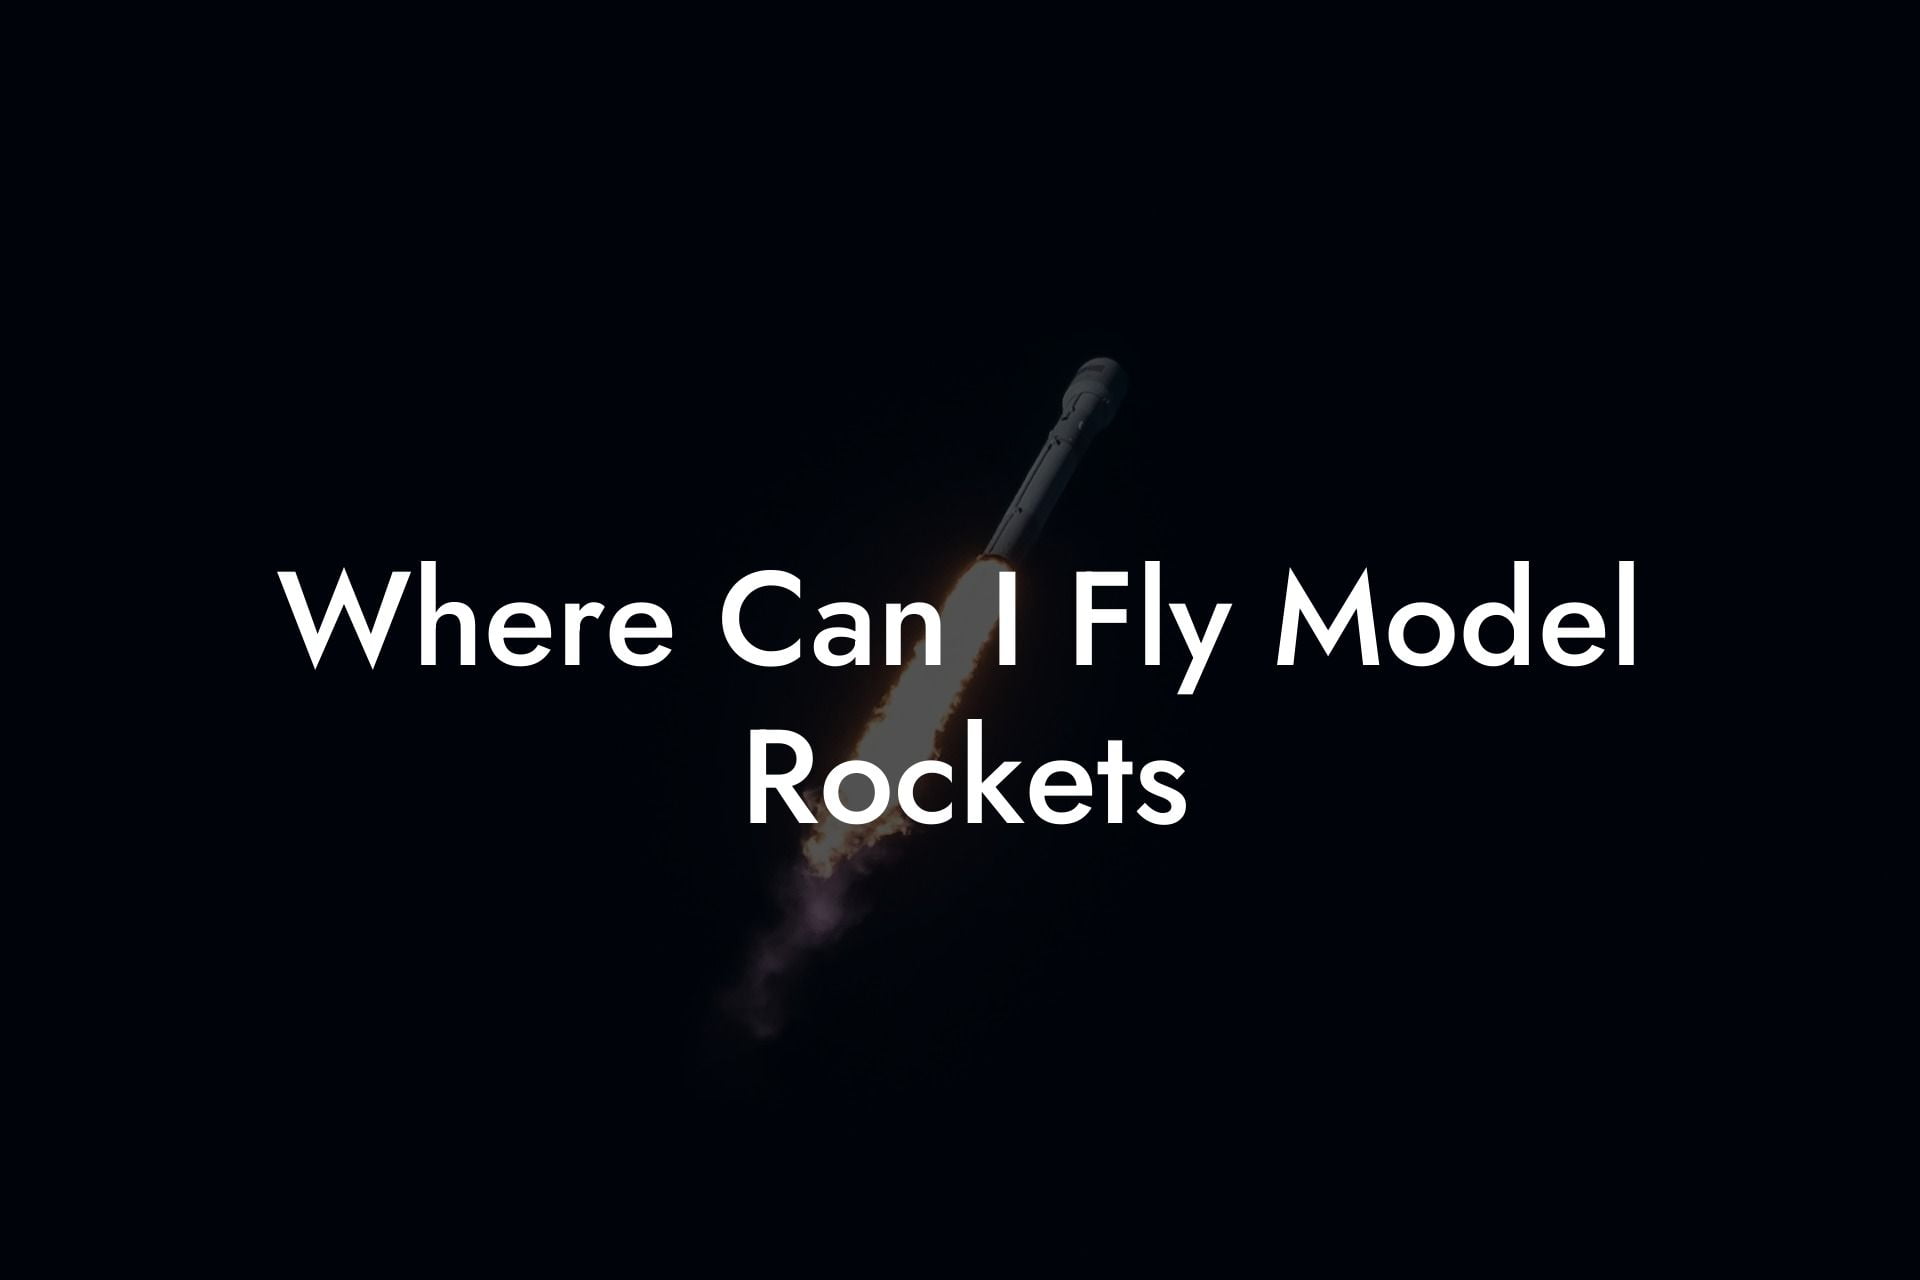 Where Can I Fly Model Rockets